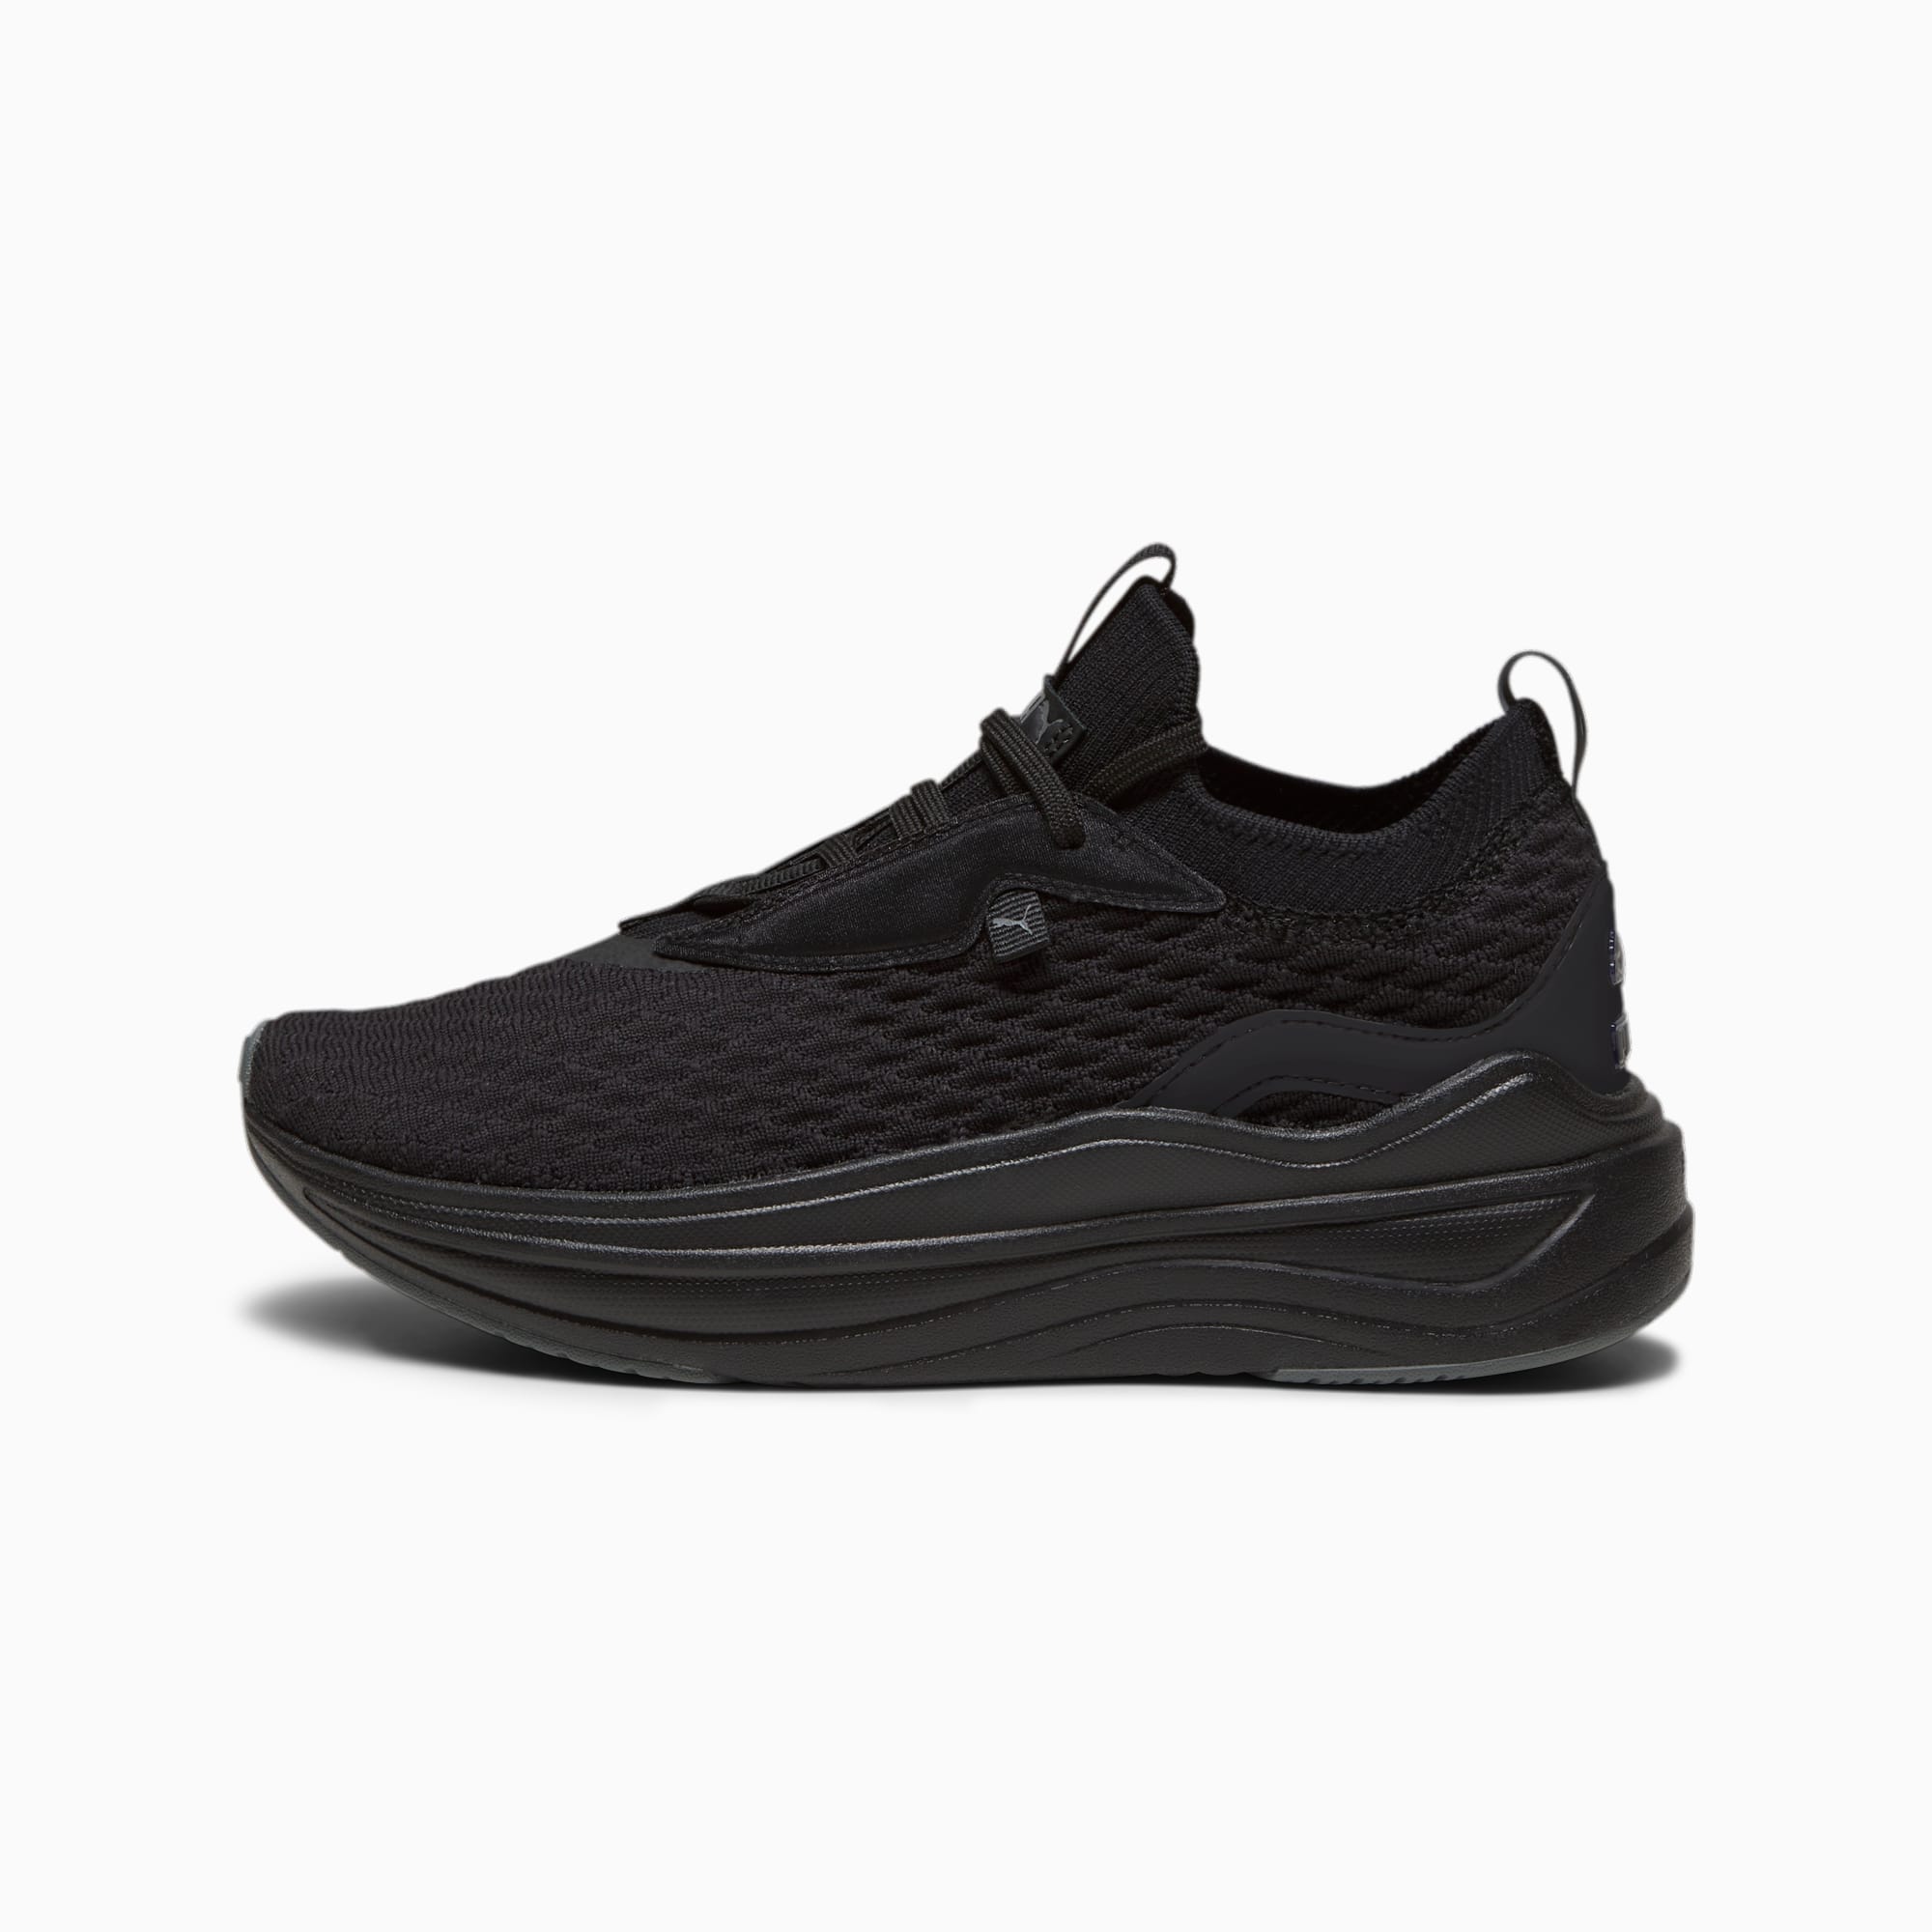 PUMA Softride Stakd Premium Women's Running Shoe Sneakers, Black/Cool Dark Grey, Size 35,5, Shoes